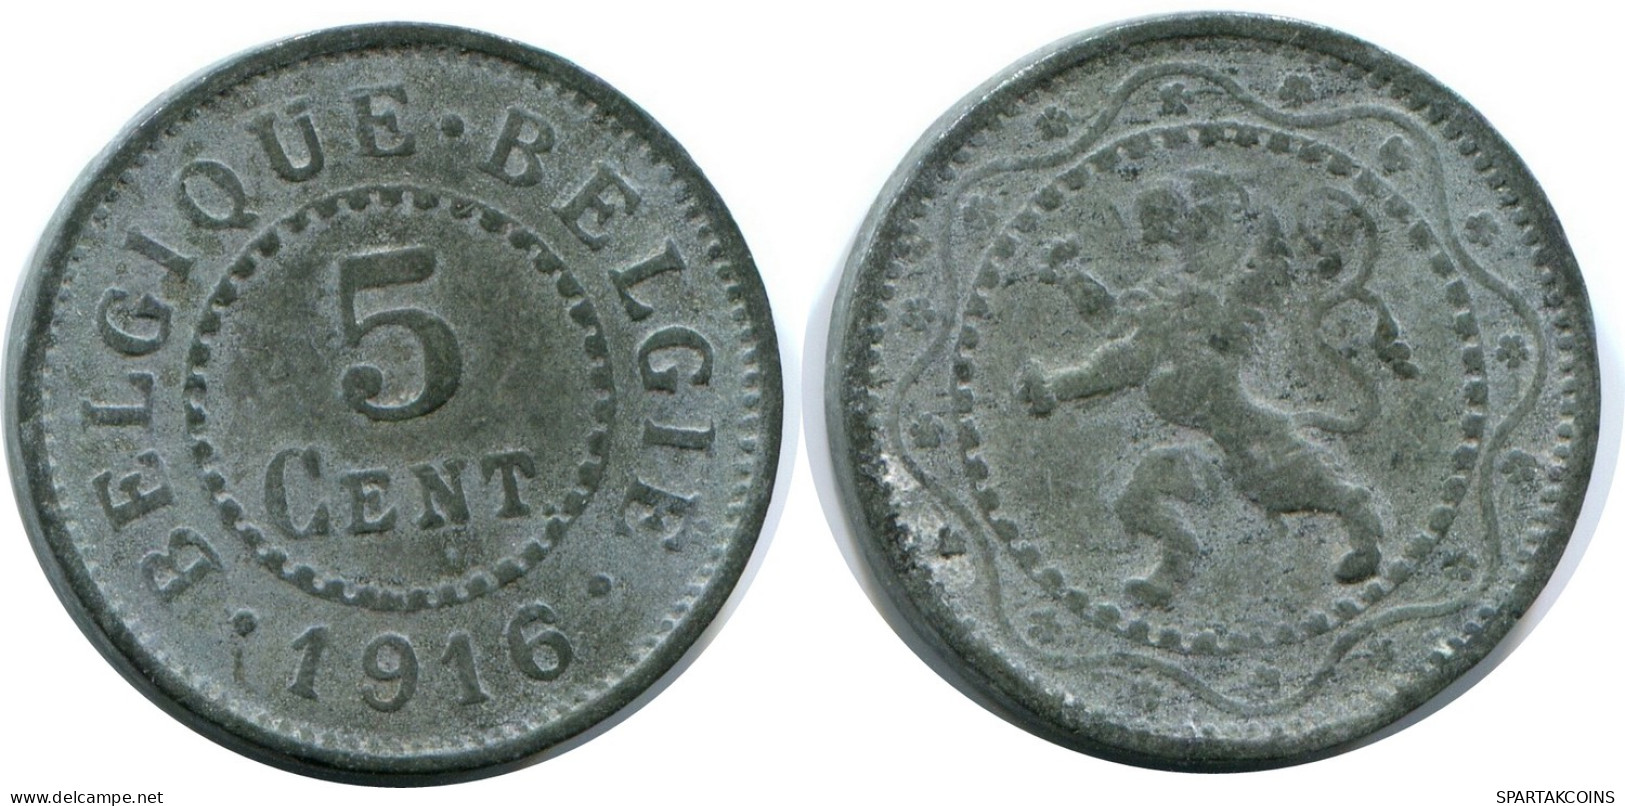 5 CENTIMES 1916 BELGIUM Coin #AW964.U - 5 Cent